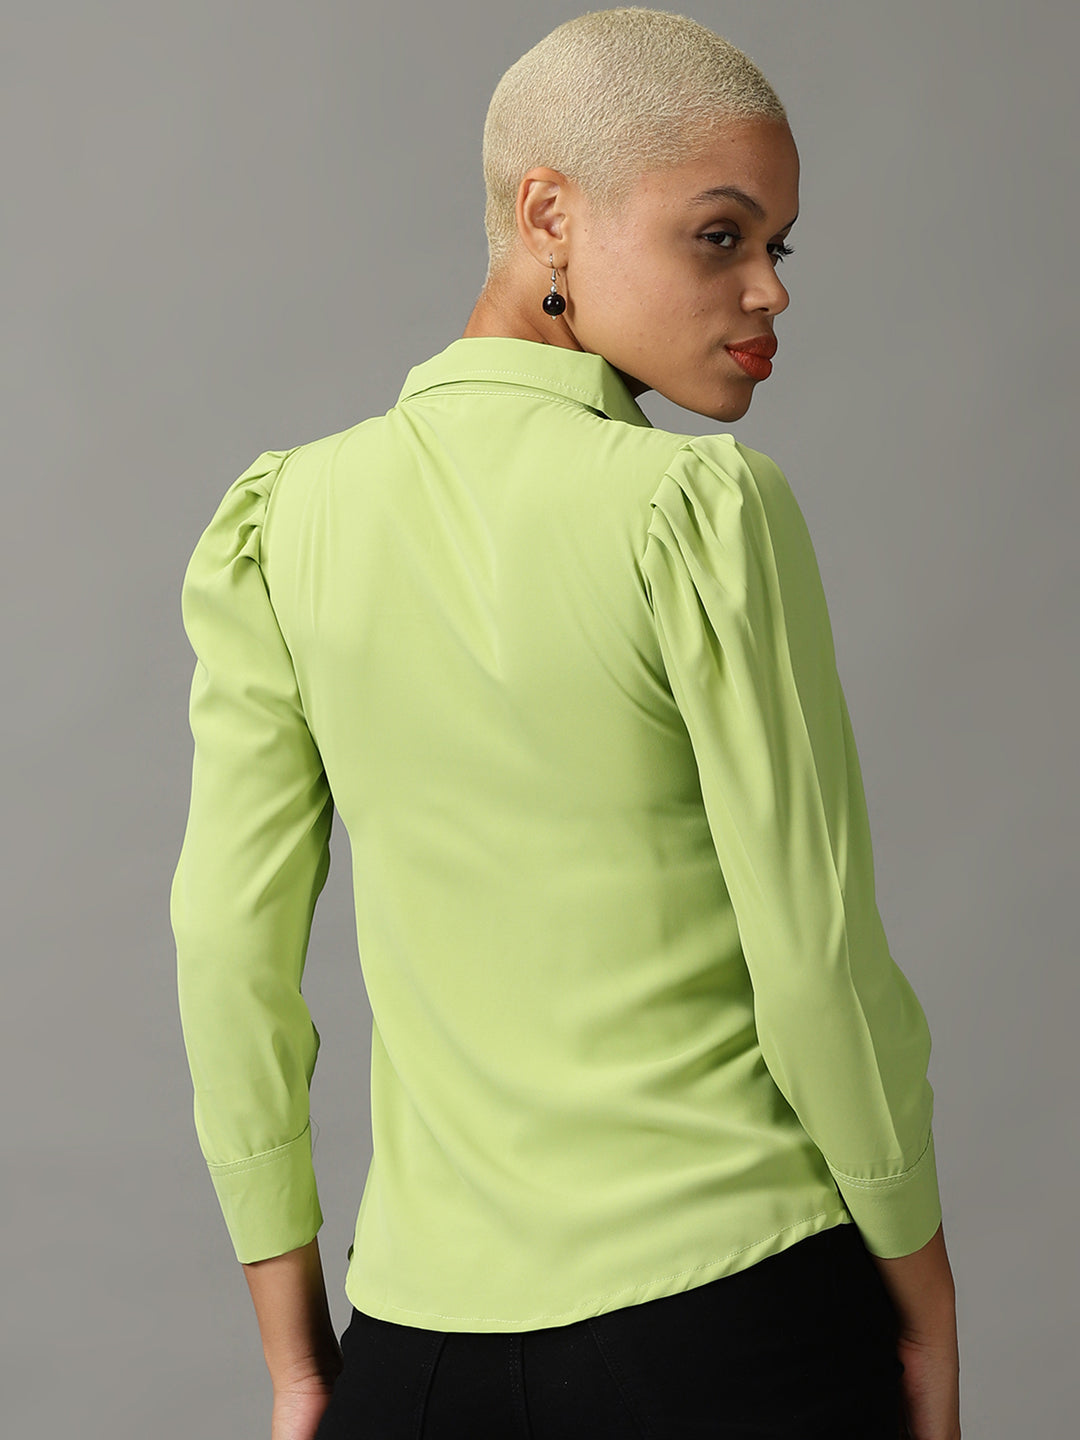 Women's Green Solid Shirt